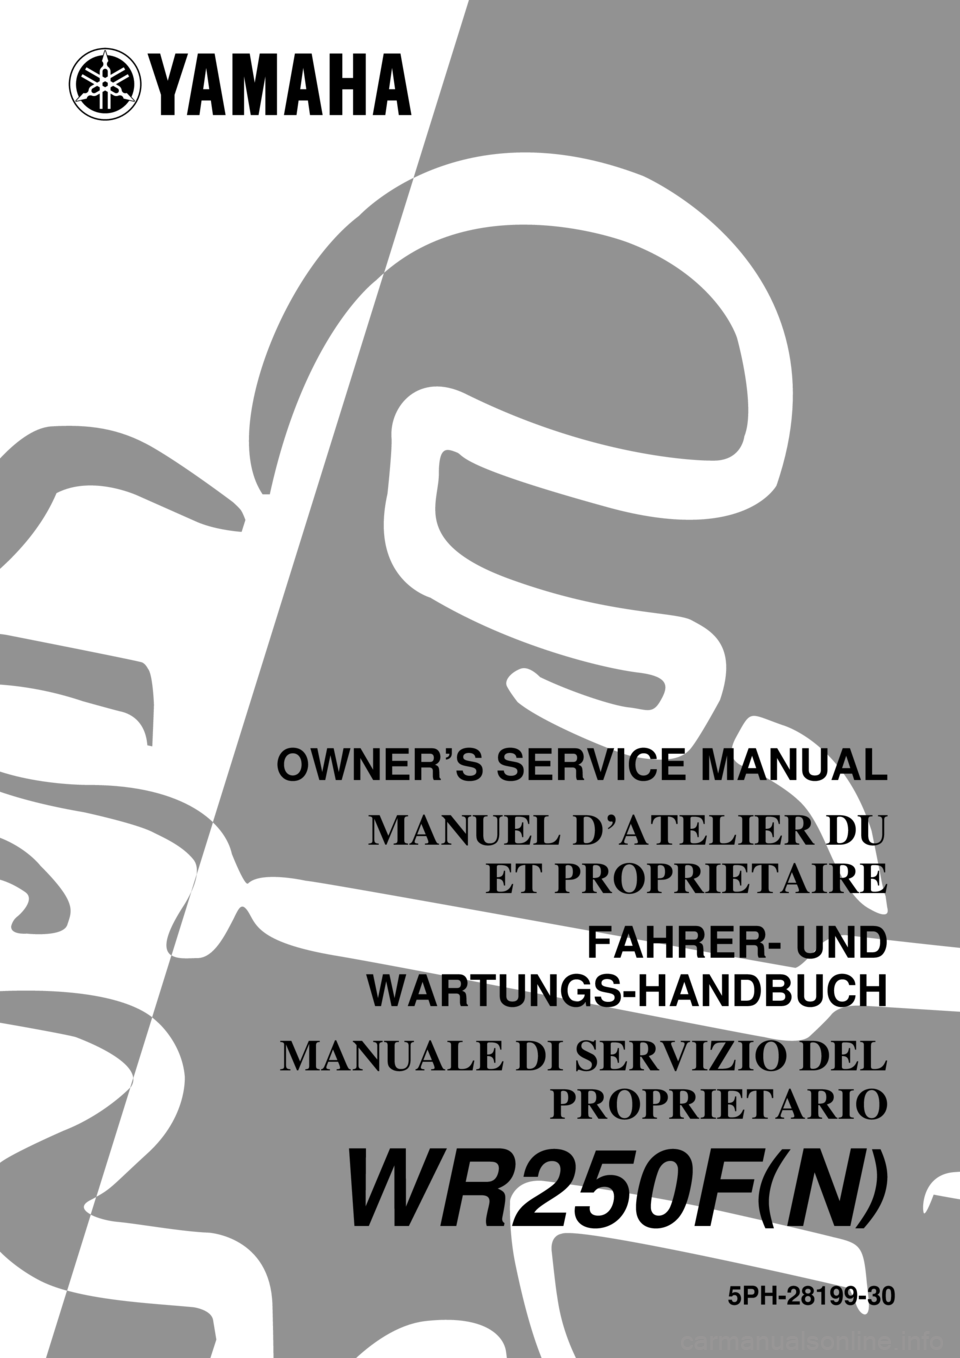 YAMAHA WR 250F 2001  Owners Manual 5PH-28199-30
WR250F(N)
OWNER’S SERVICE MANUAL
MANUEL D’ATELIER DU
ET PROPRIETAIRE
FAHRER- UND
WARTUNGS-HANDBUCH
MANUALE DI SERVIZIO DEL
PROPRIETARIO 